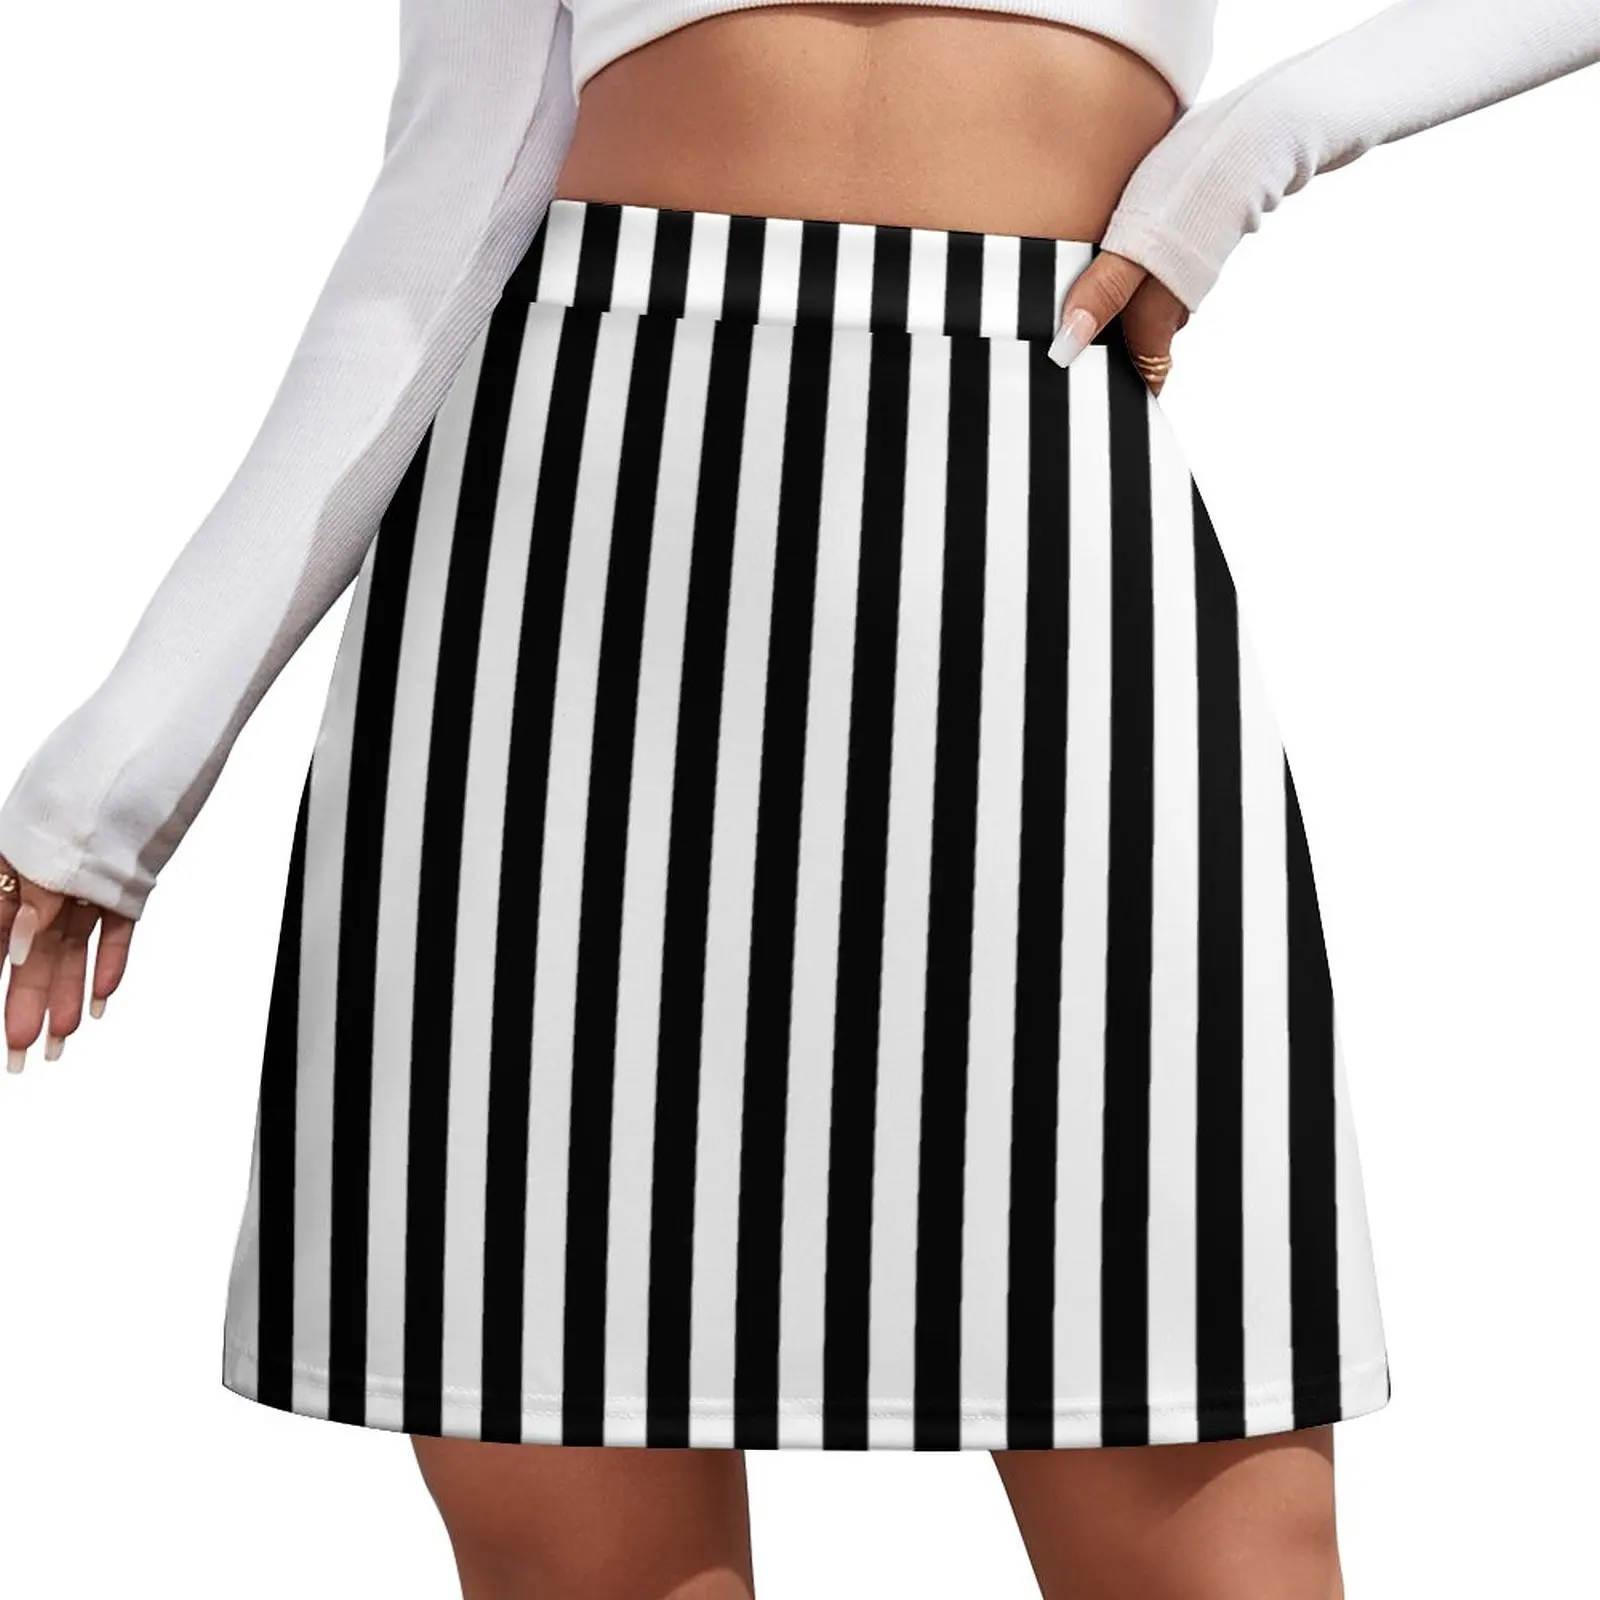 Cabana Stripes Black and White Mini Skirt School skirt new in external clothes shorts Womens dresses